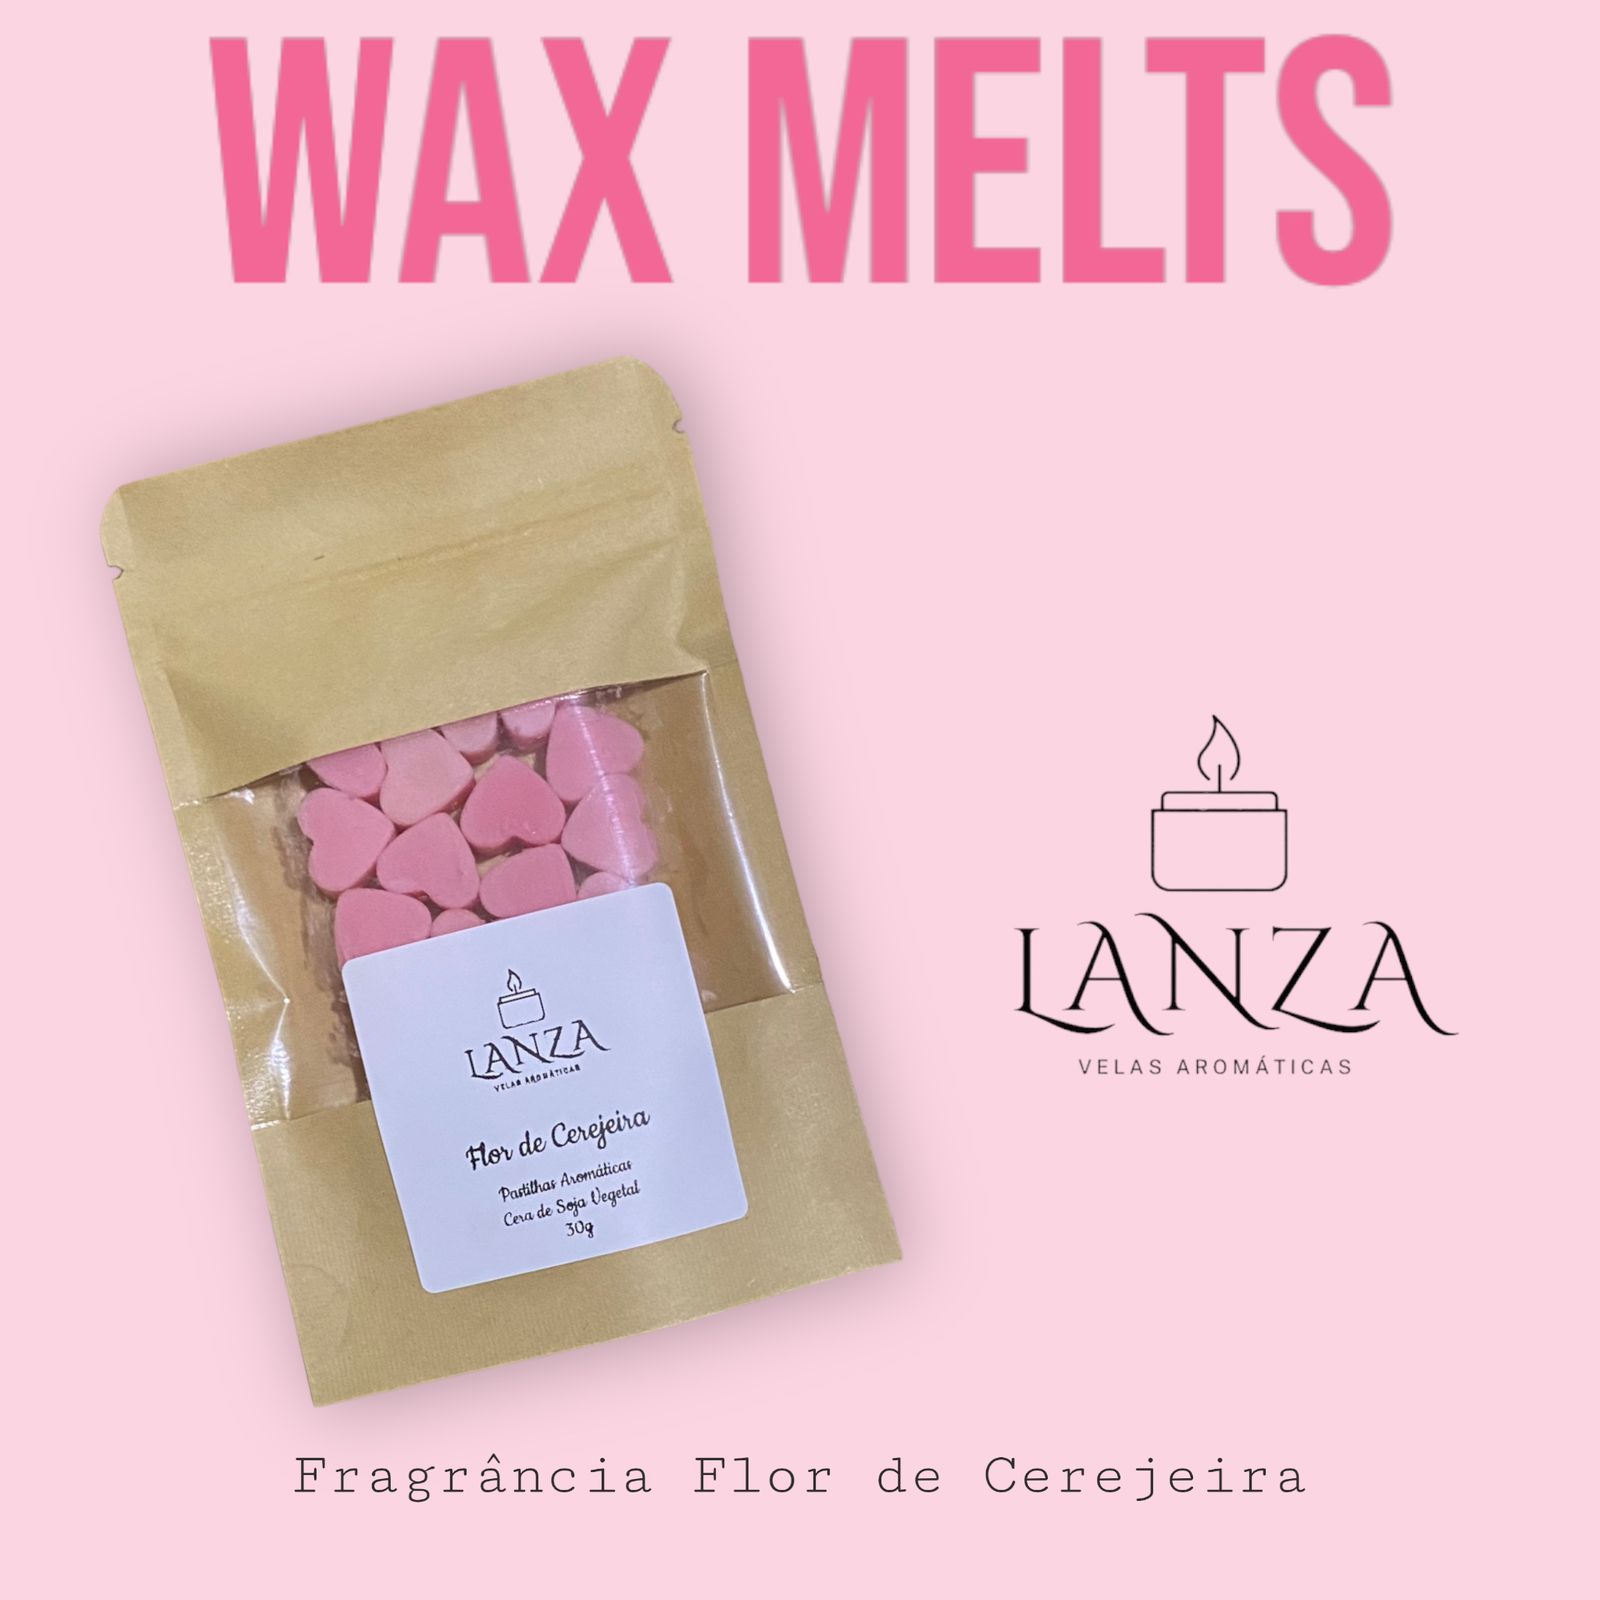 Wax Melts Flor de Cerejeira $12